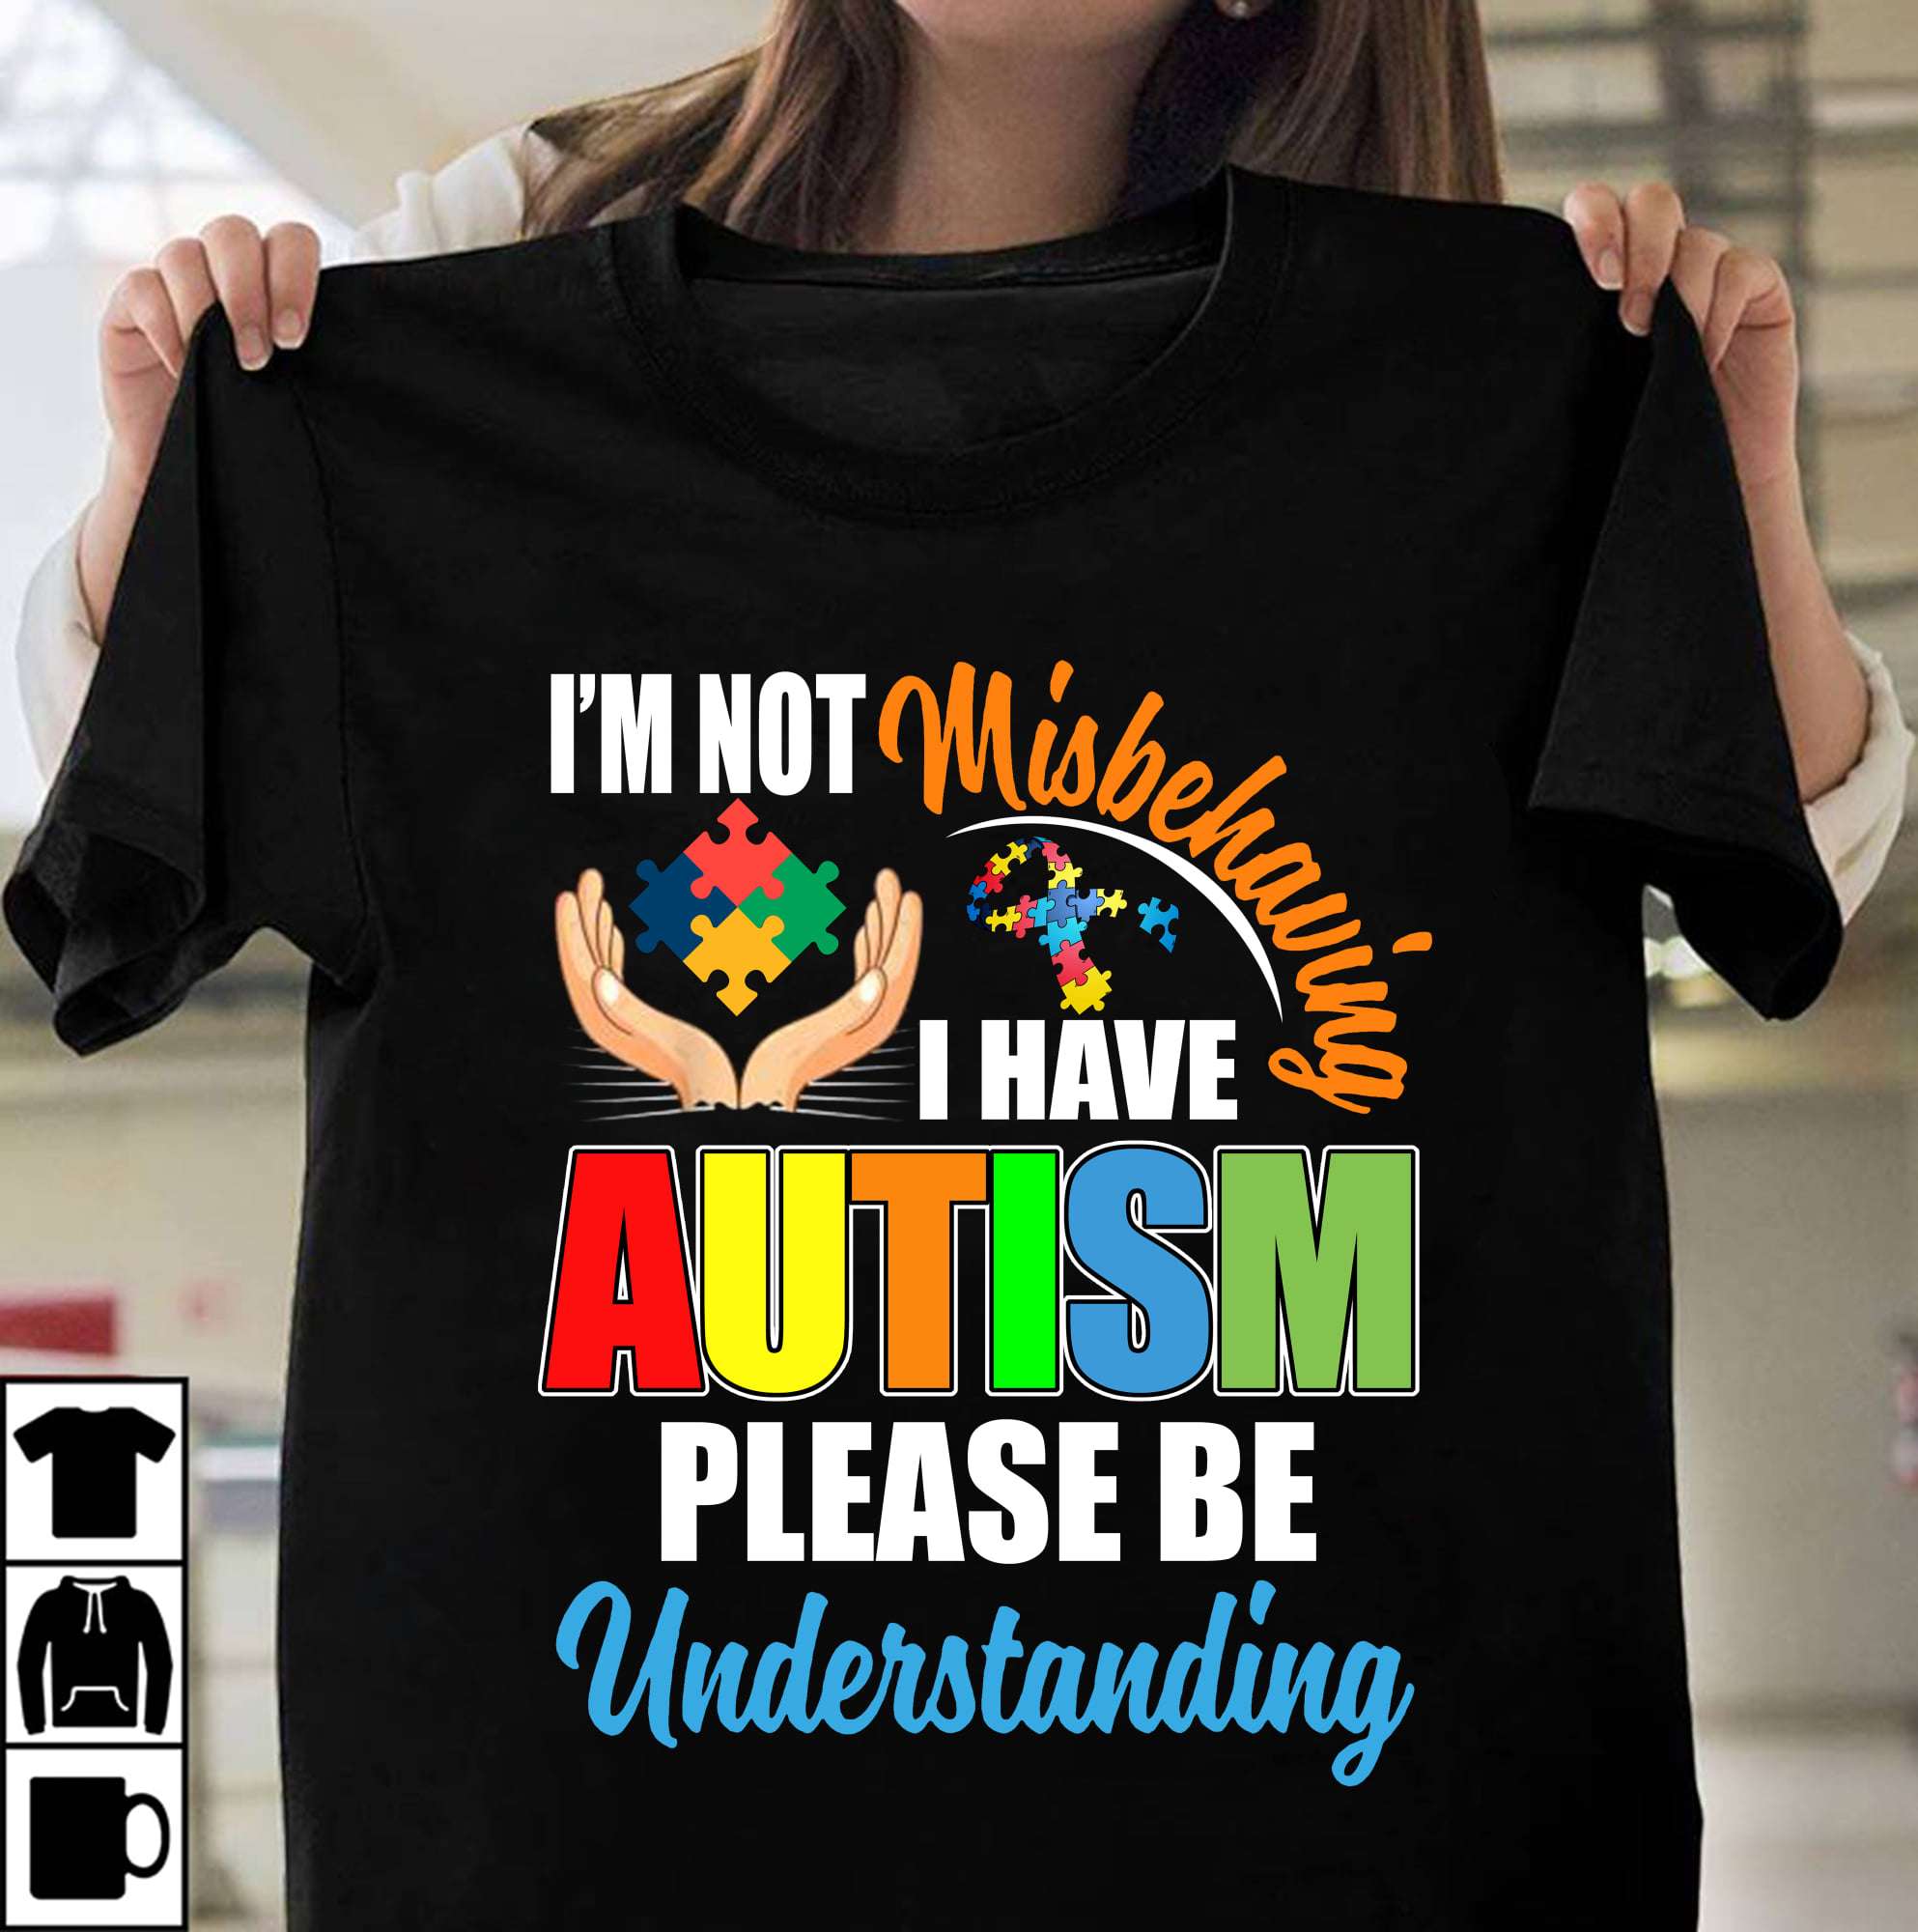 Autism Awareness - I'm not misbehaving i have autism please be understanding